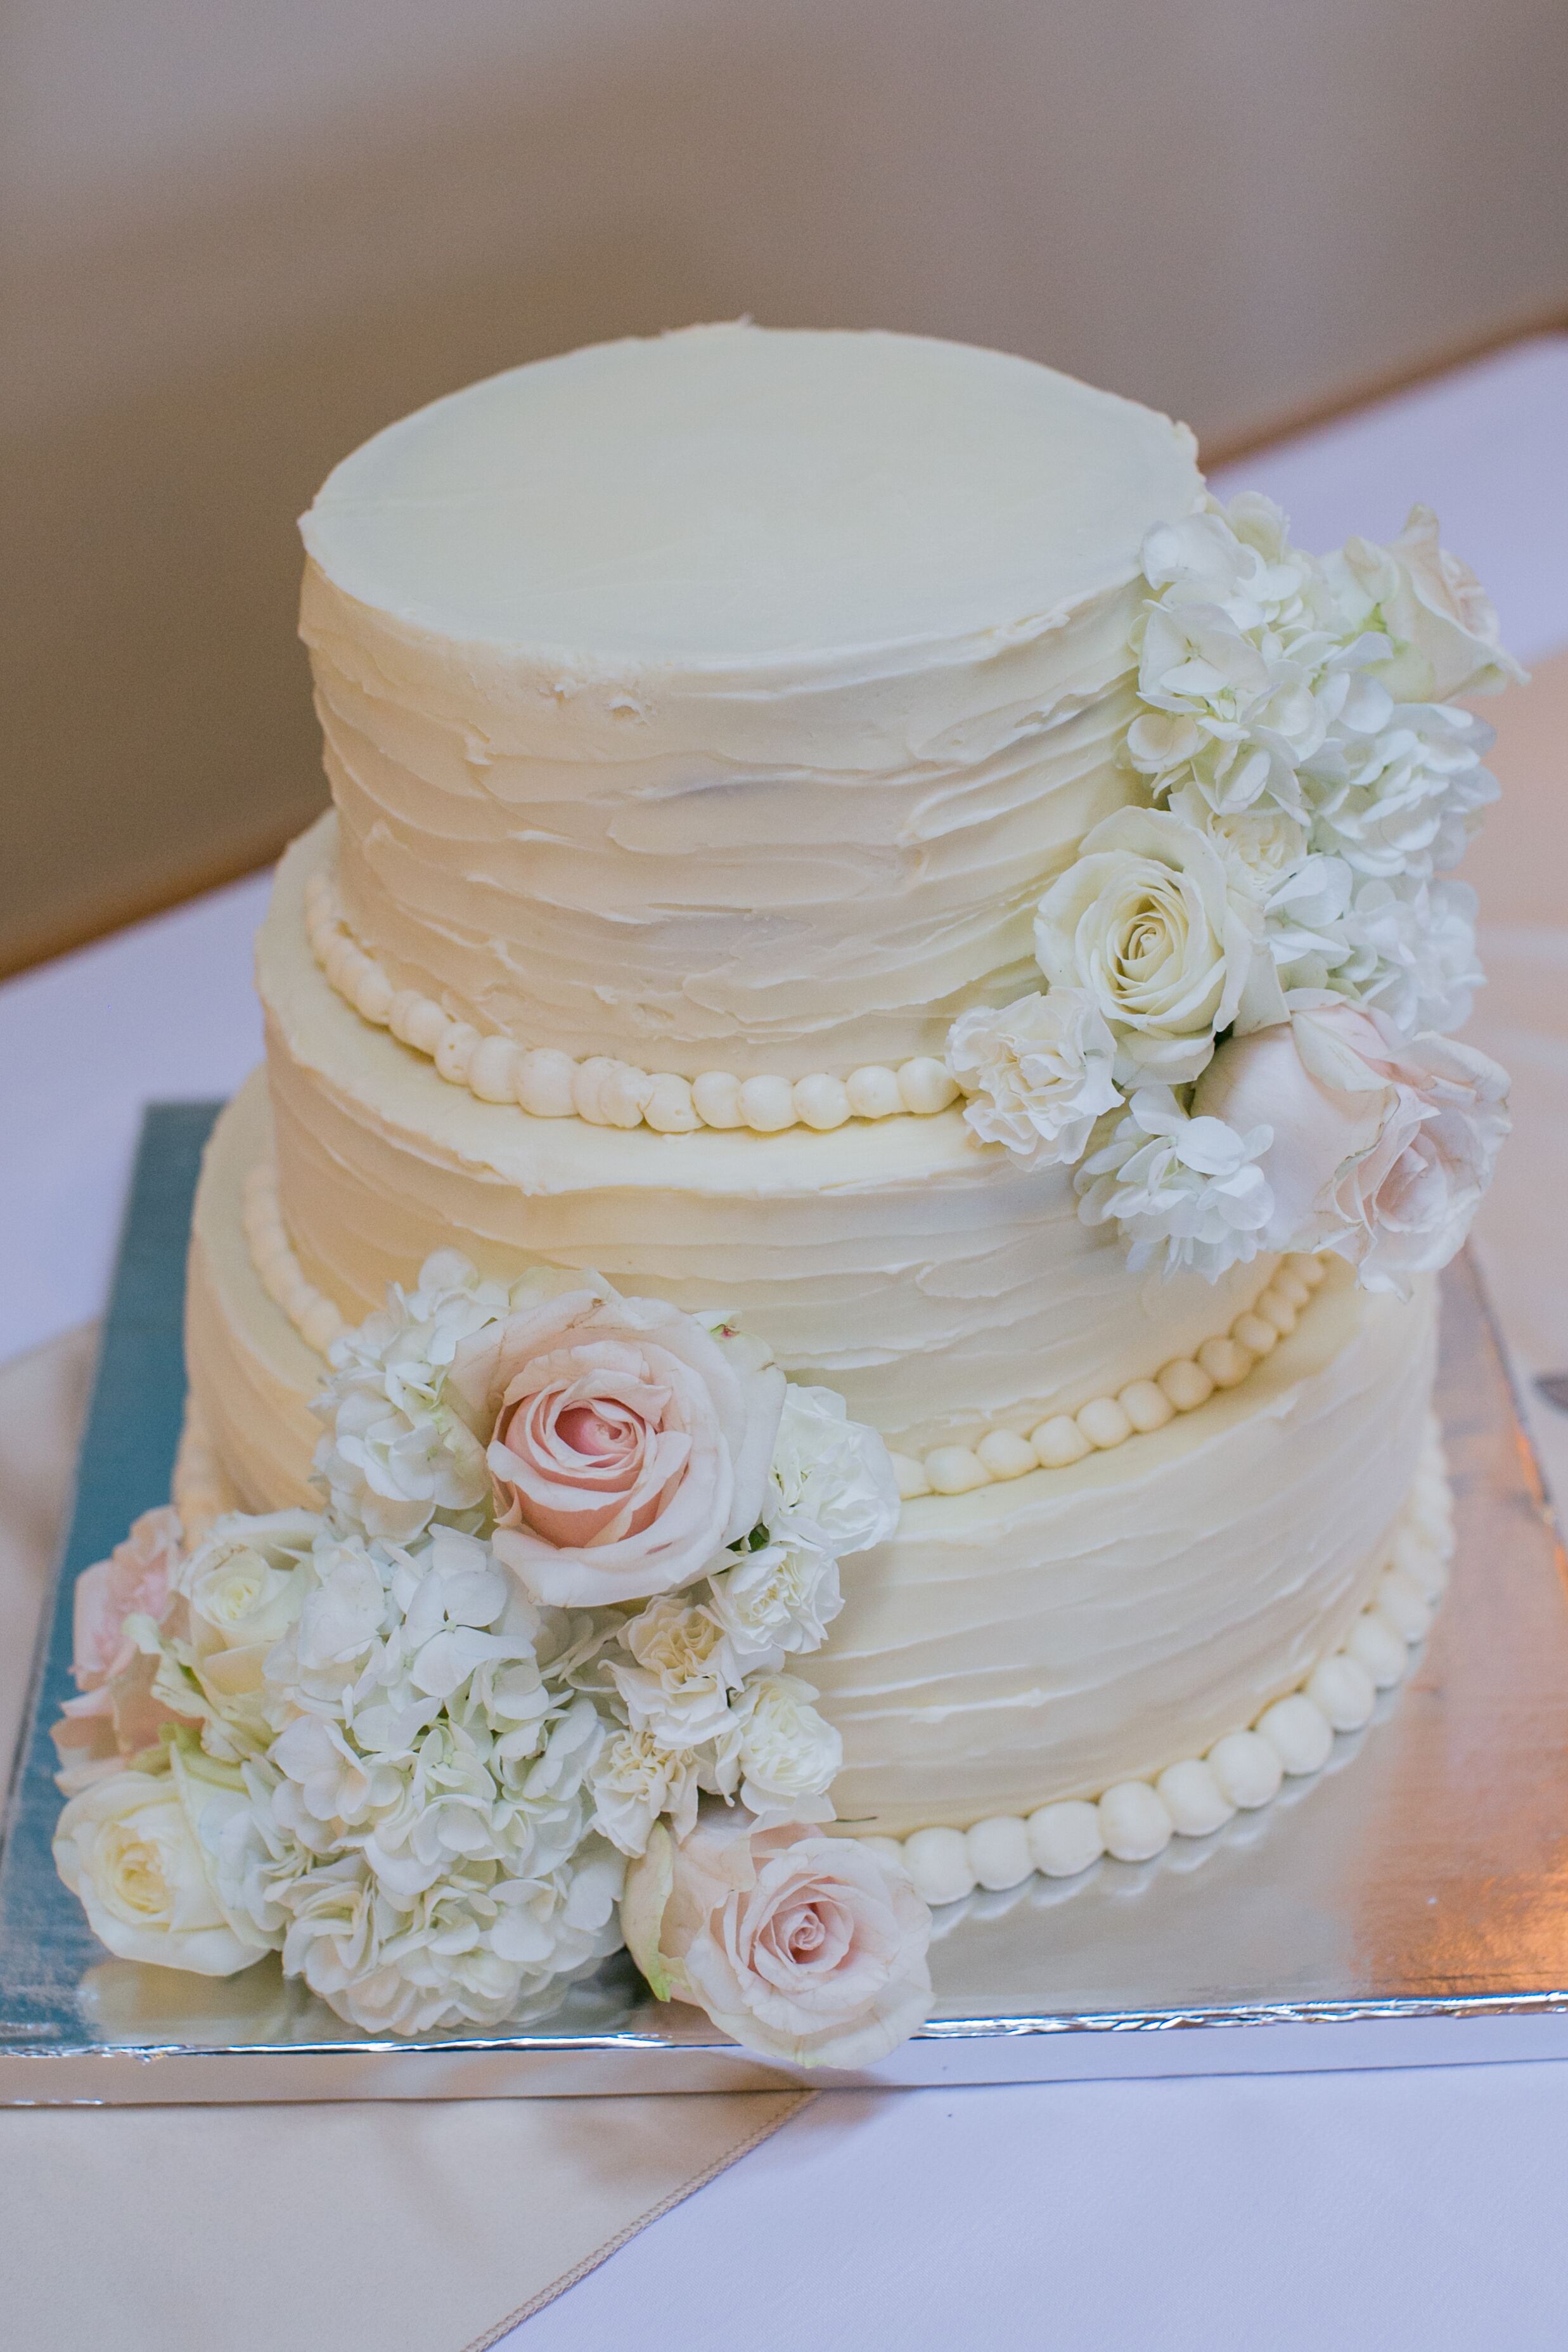 Vanilla Wedding Cake With Custard Filling